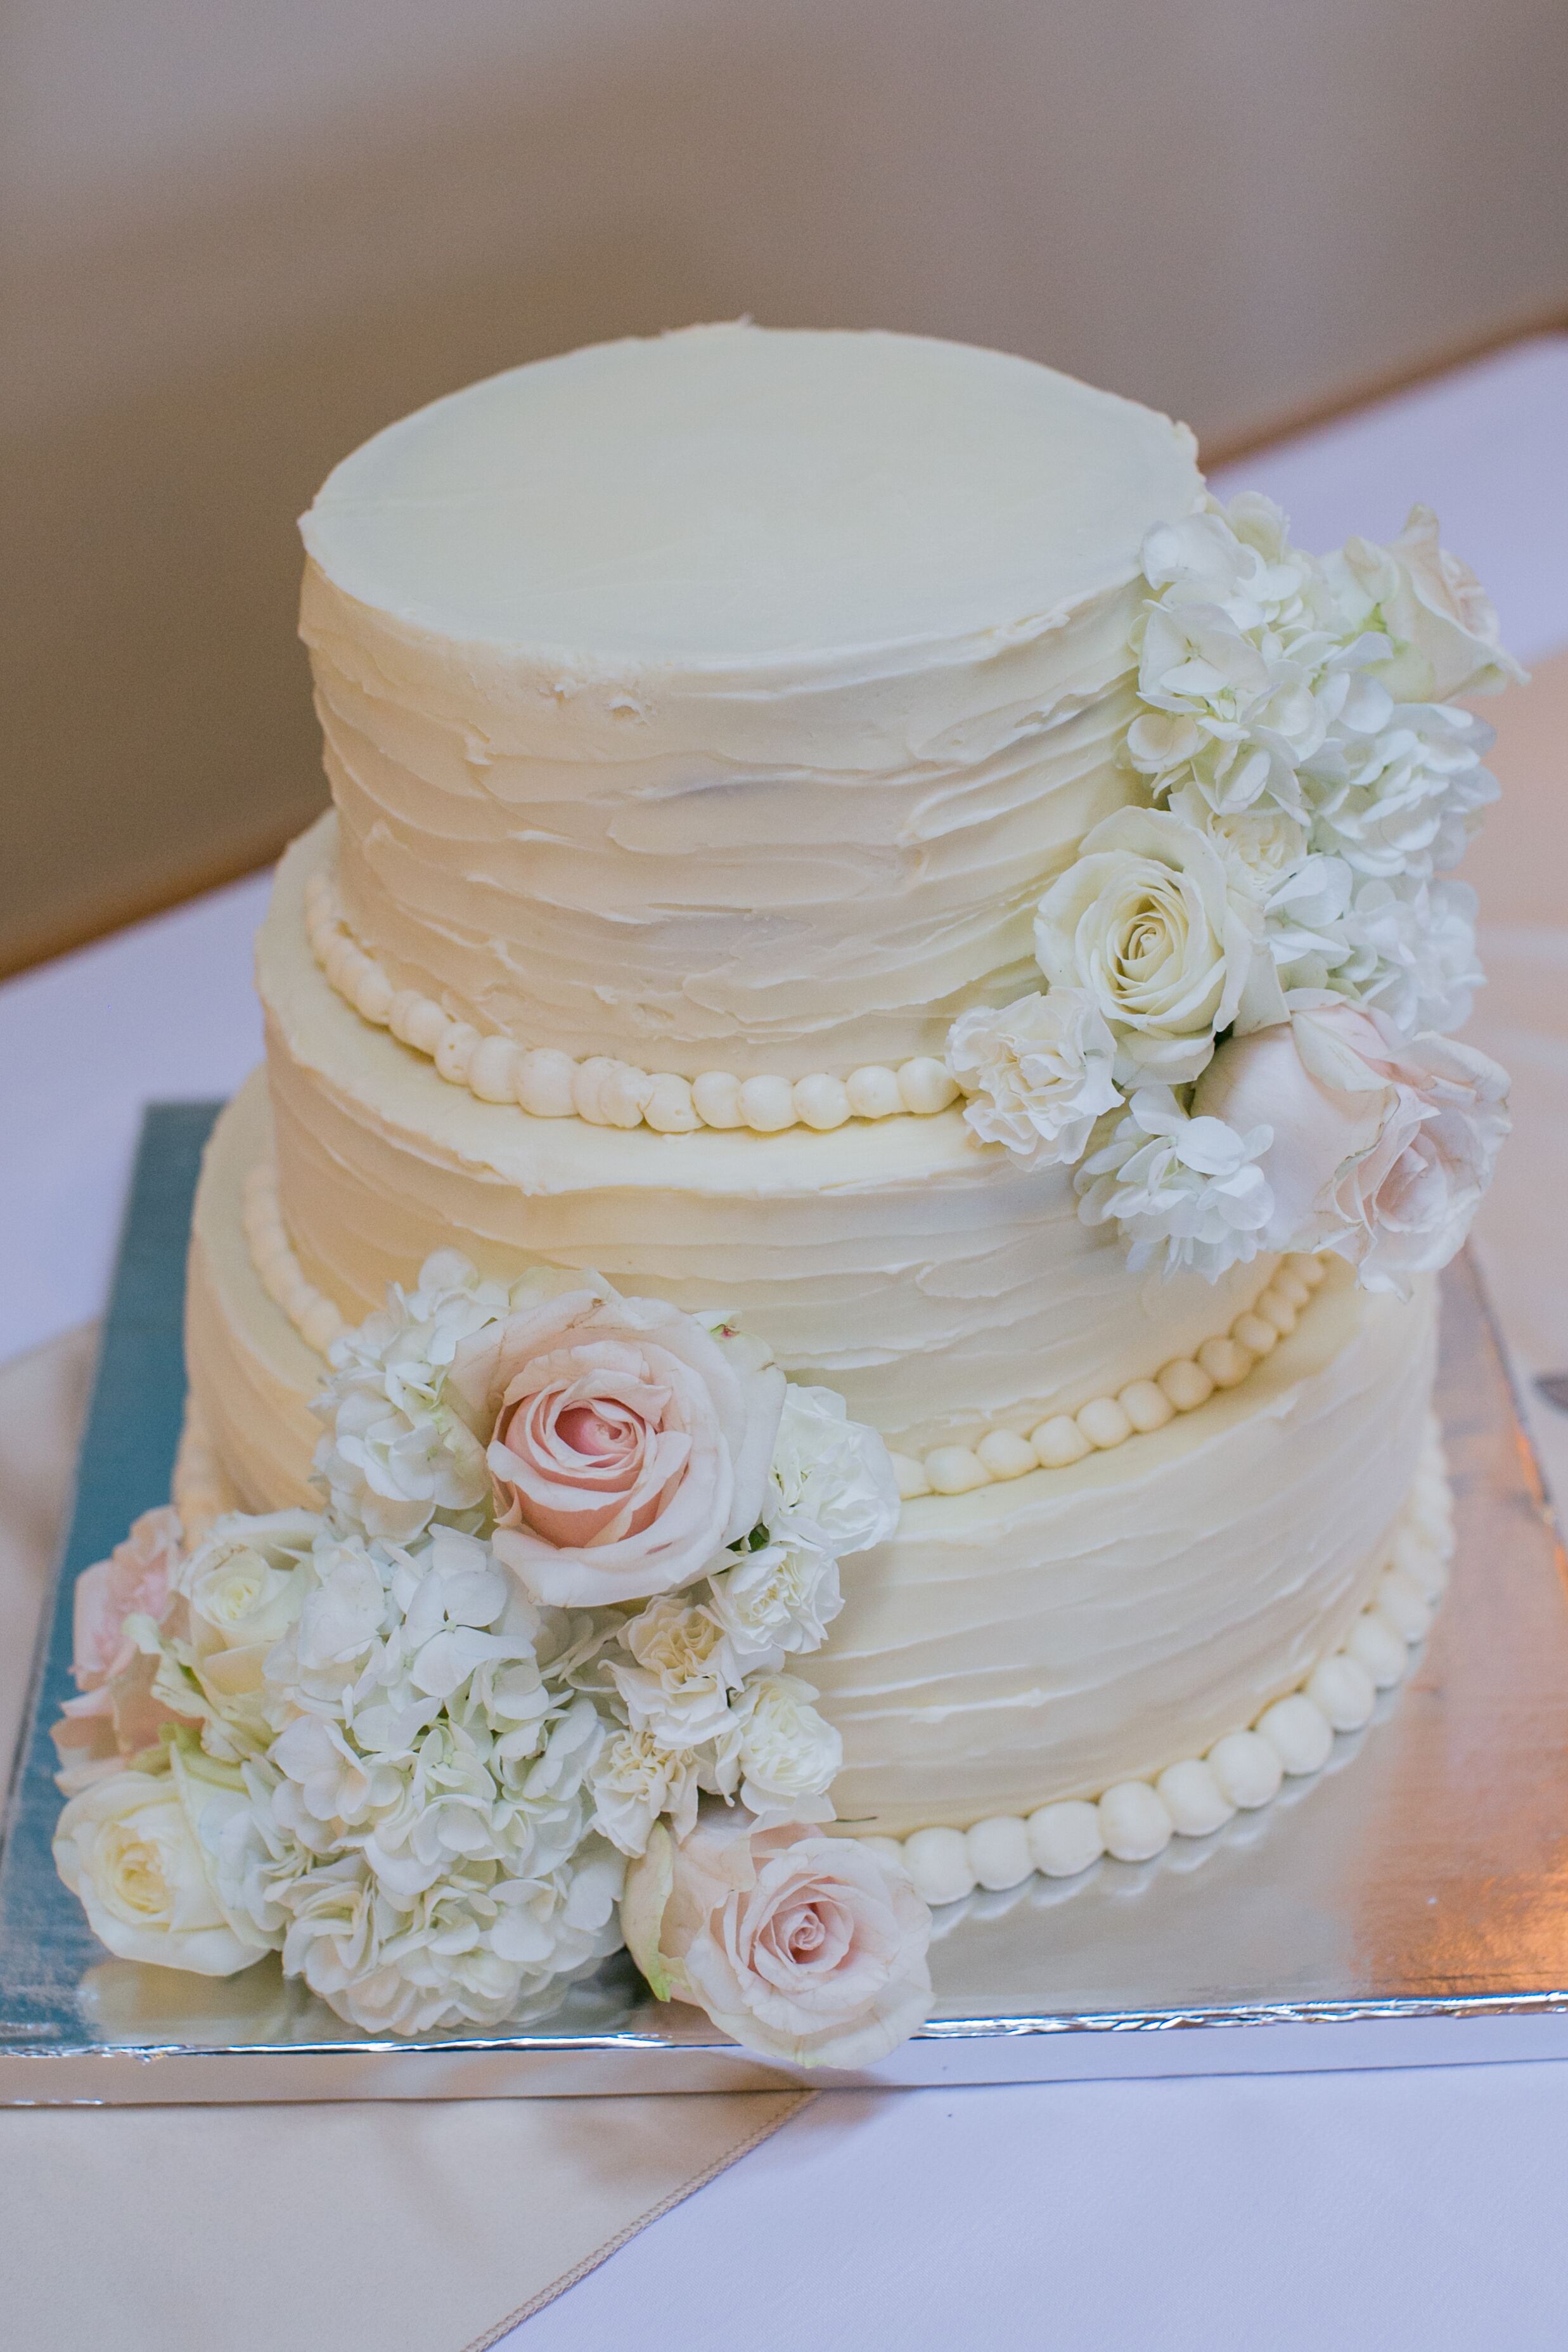 Vanilla Wedding Cake With Custard Filling